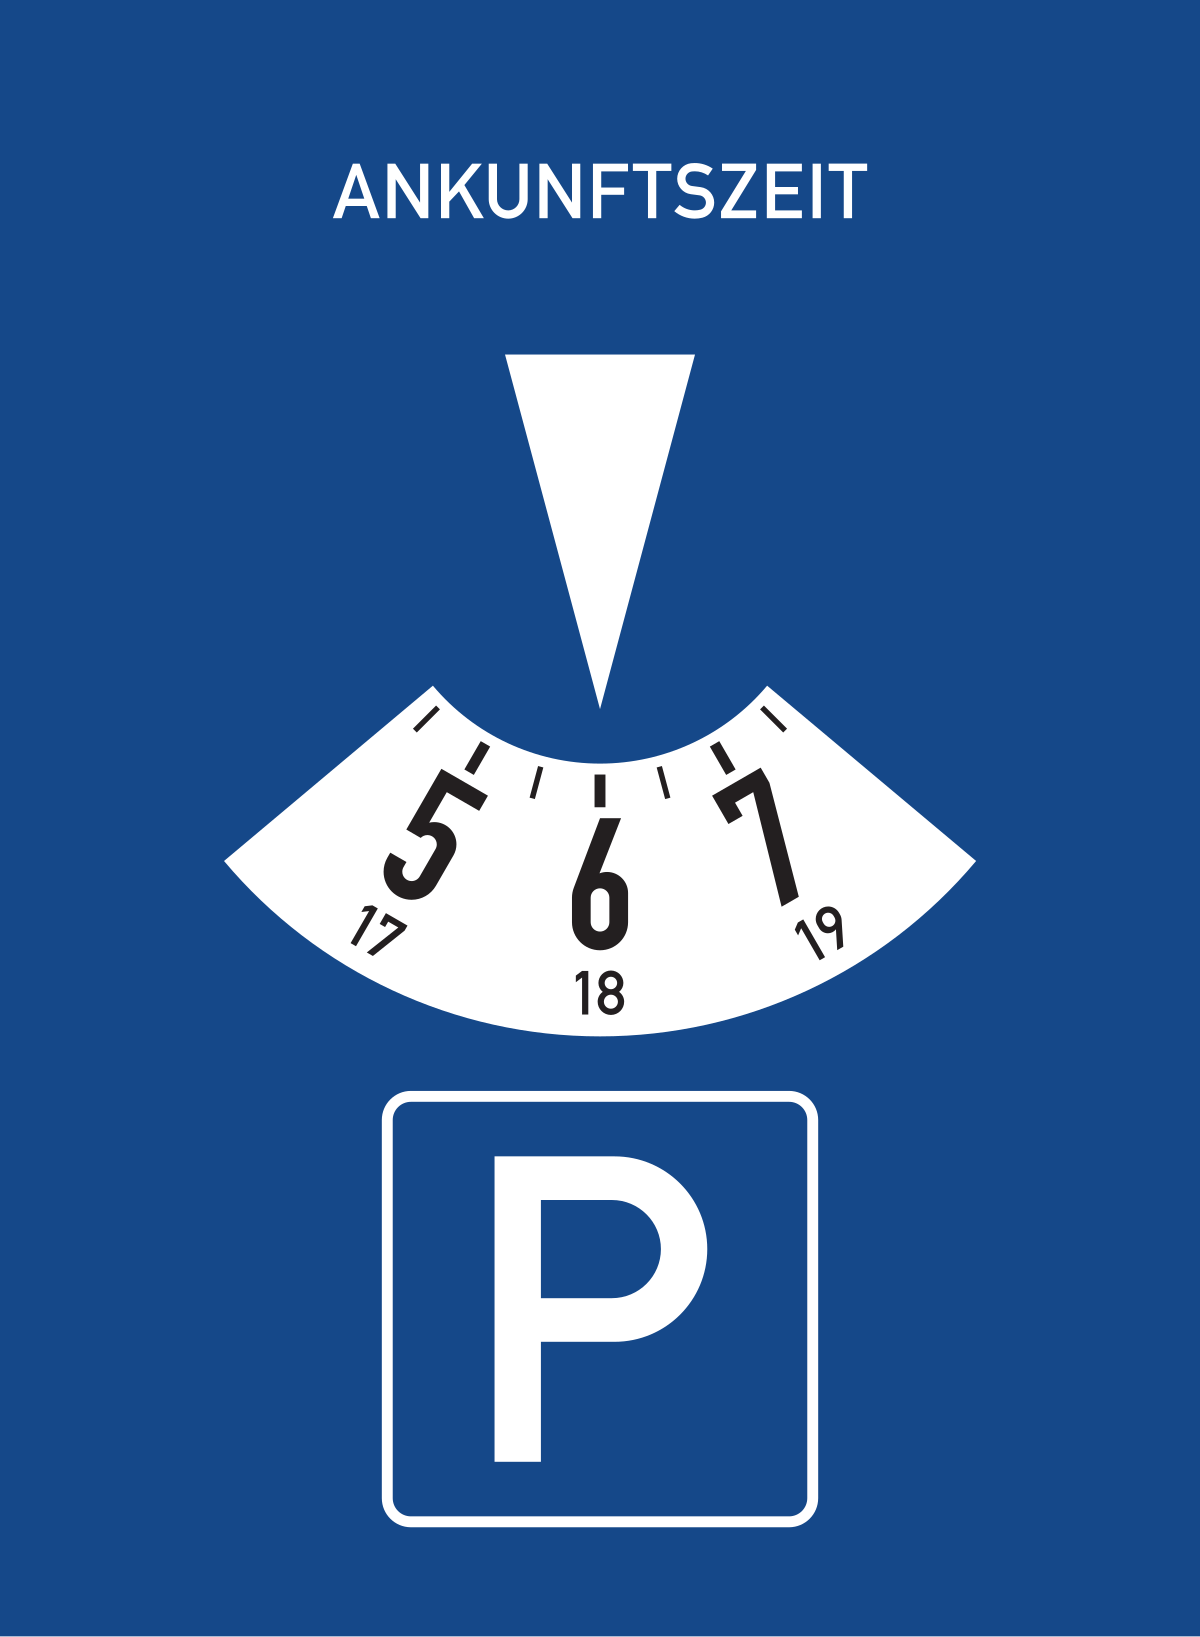 Disc parking - Wikipedia